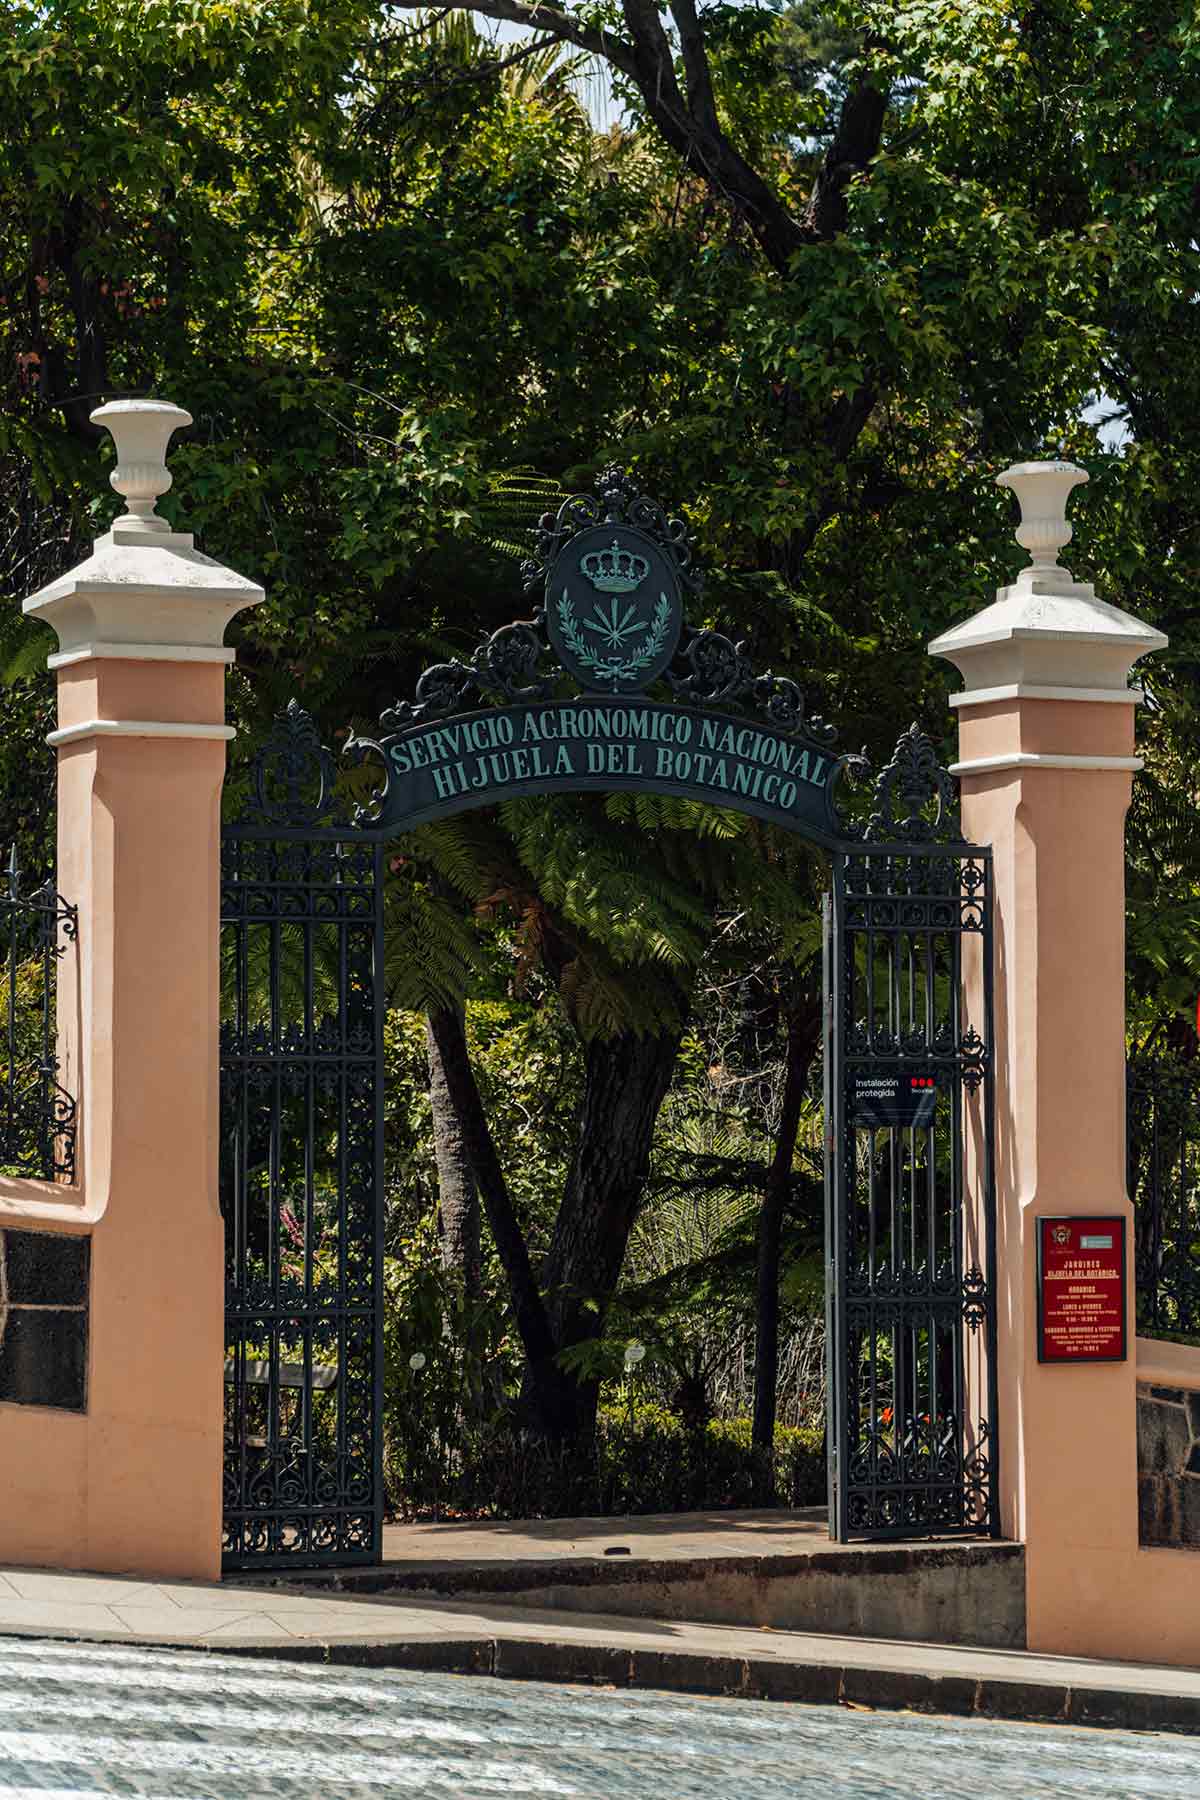 The entrance to the Botanical Garden in La Orotava, Tenerife